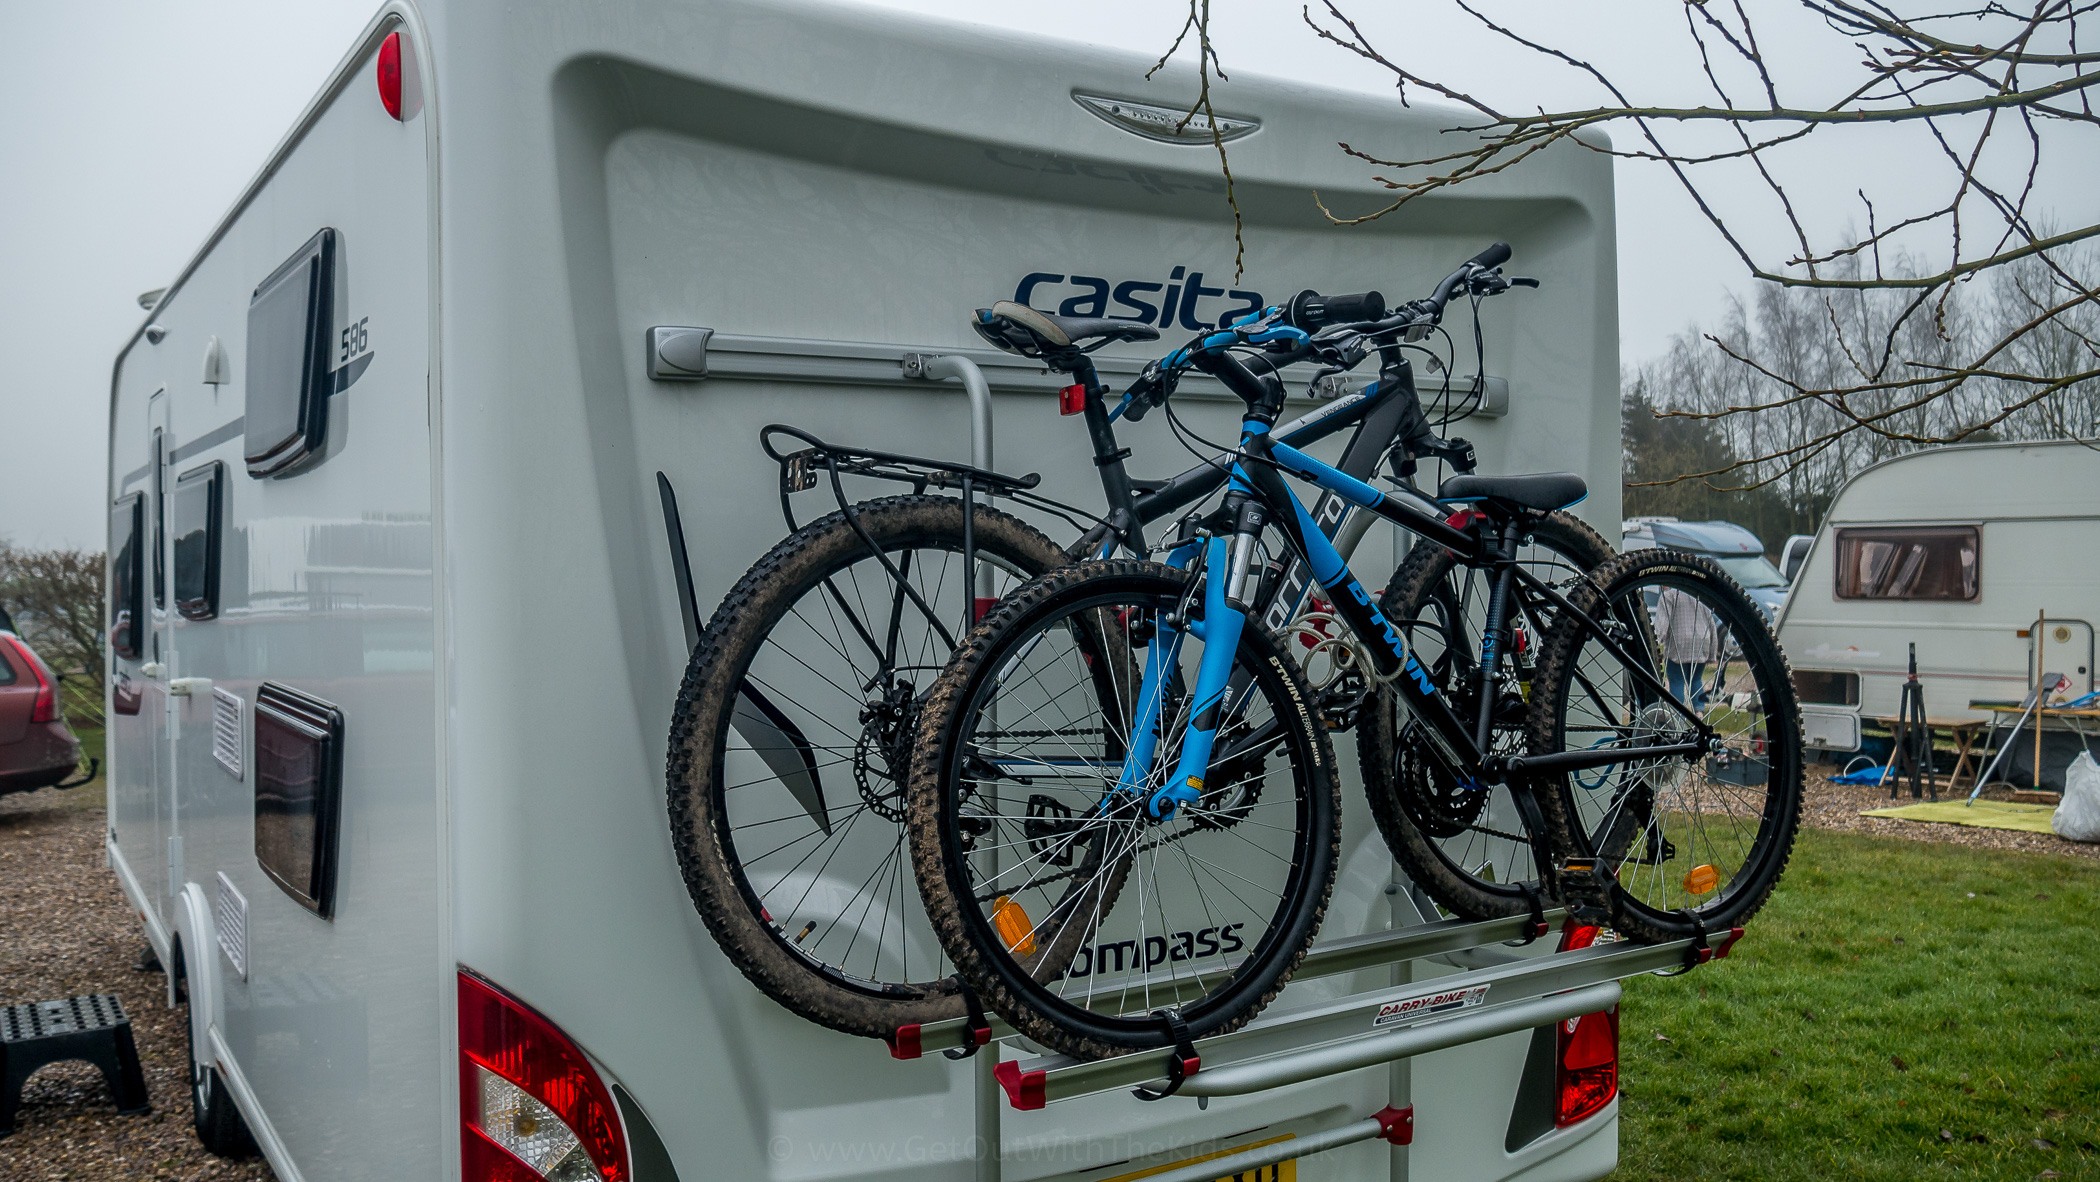 The bikes on the caravan